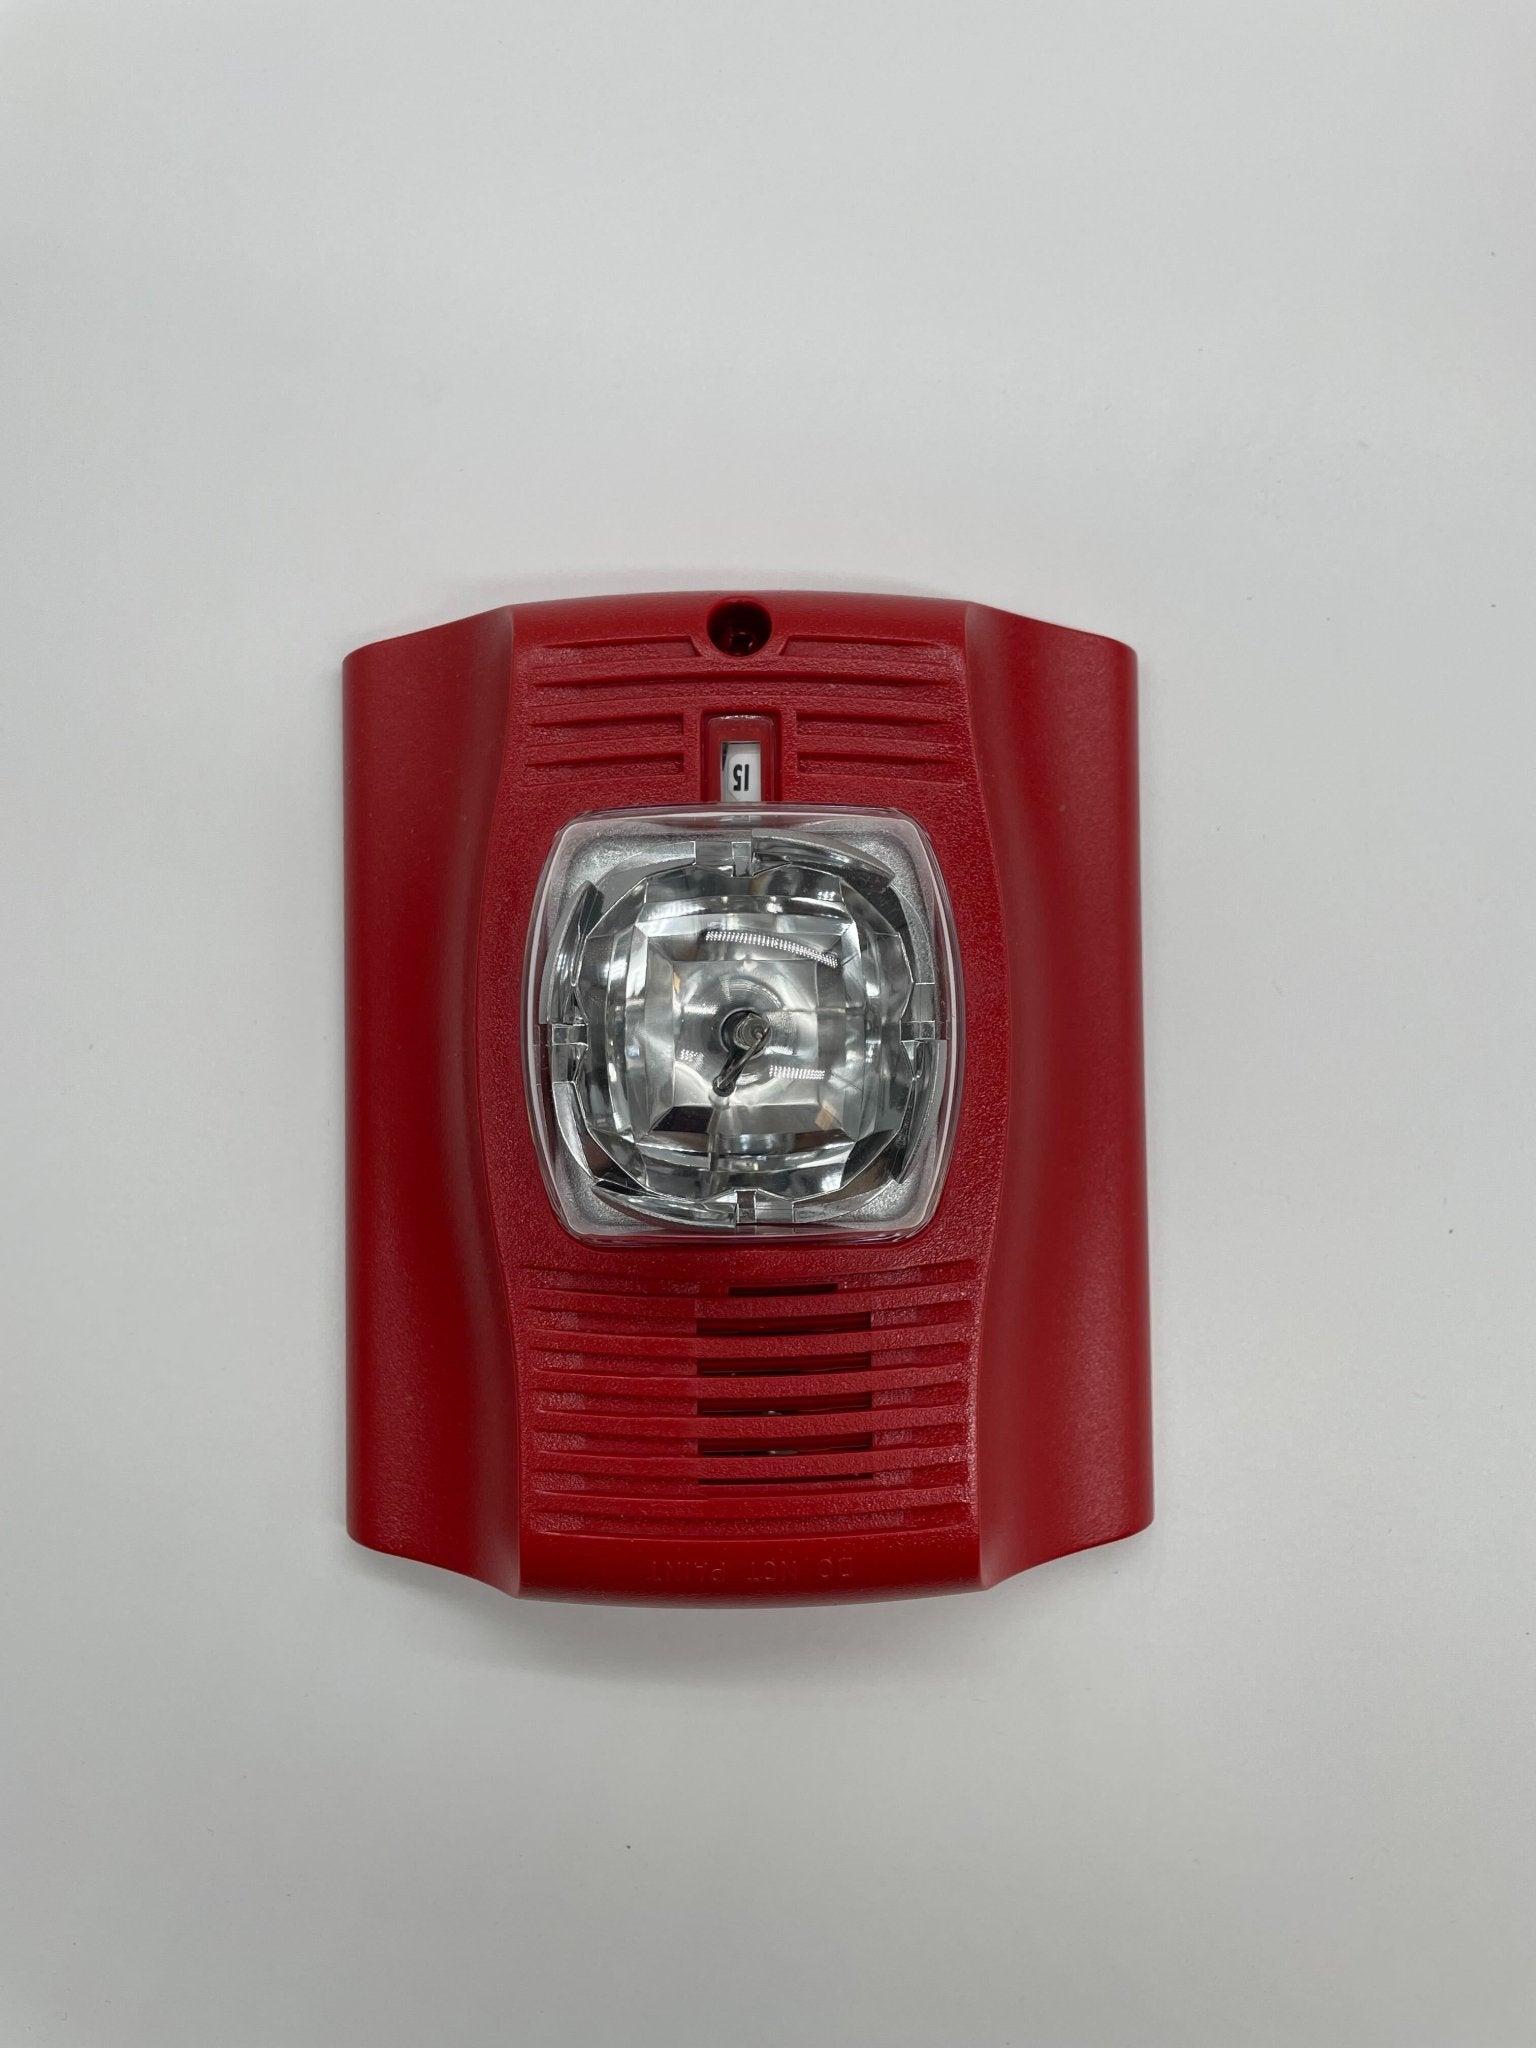 System Sensor P2RK-P - The Fire Alarm Supplier